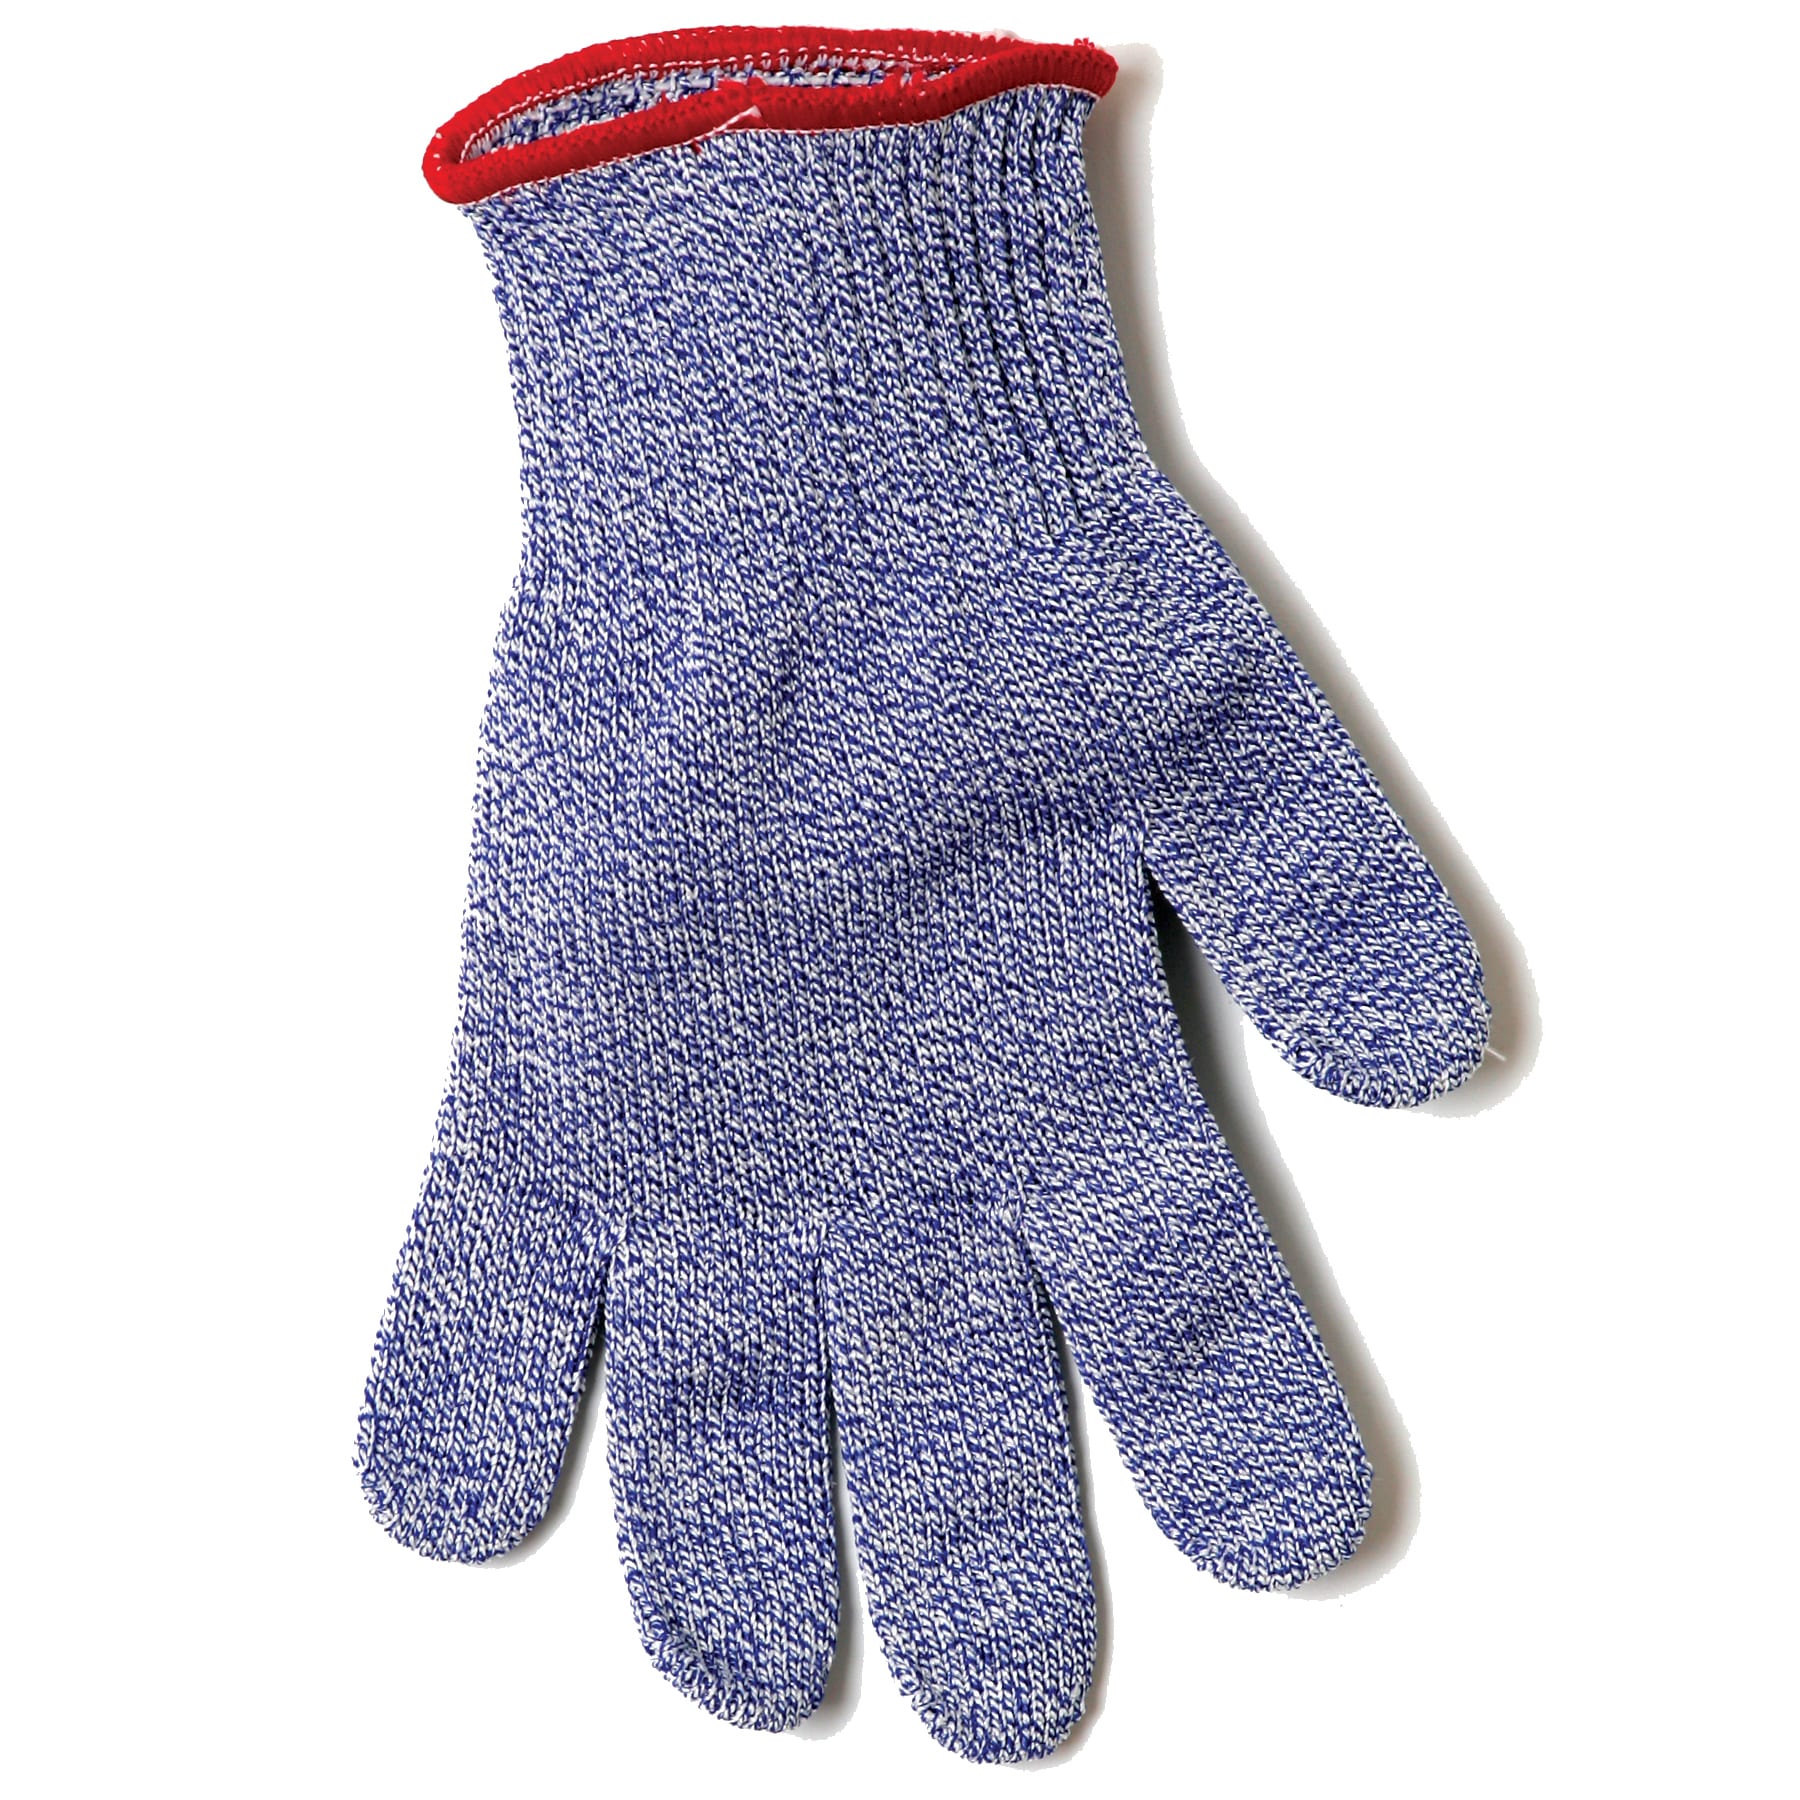 San Jamar Cut Resistant Gloves